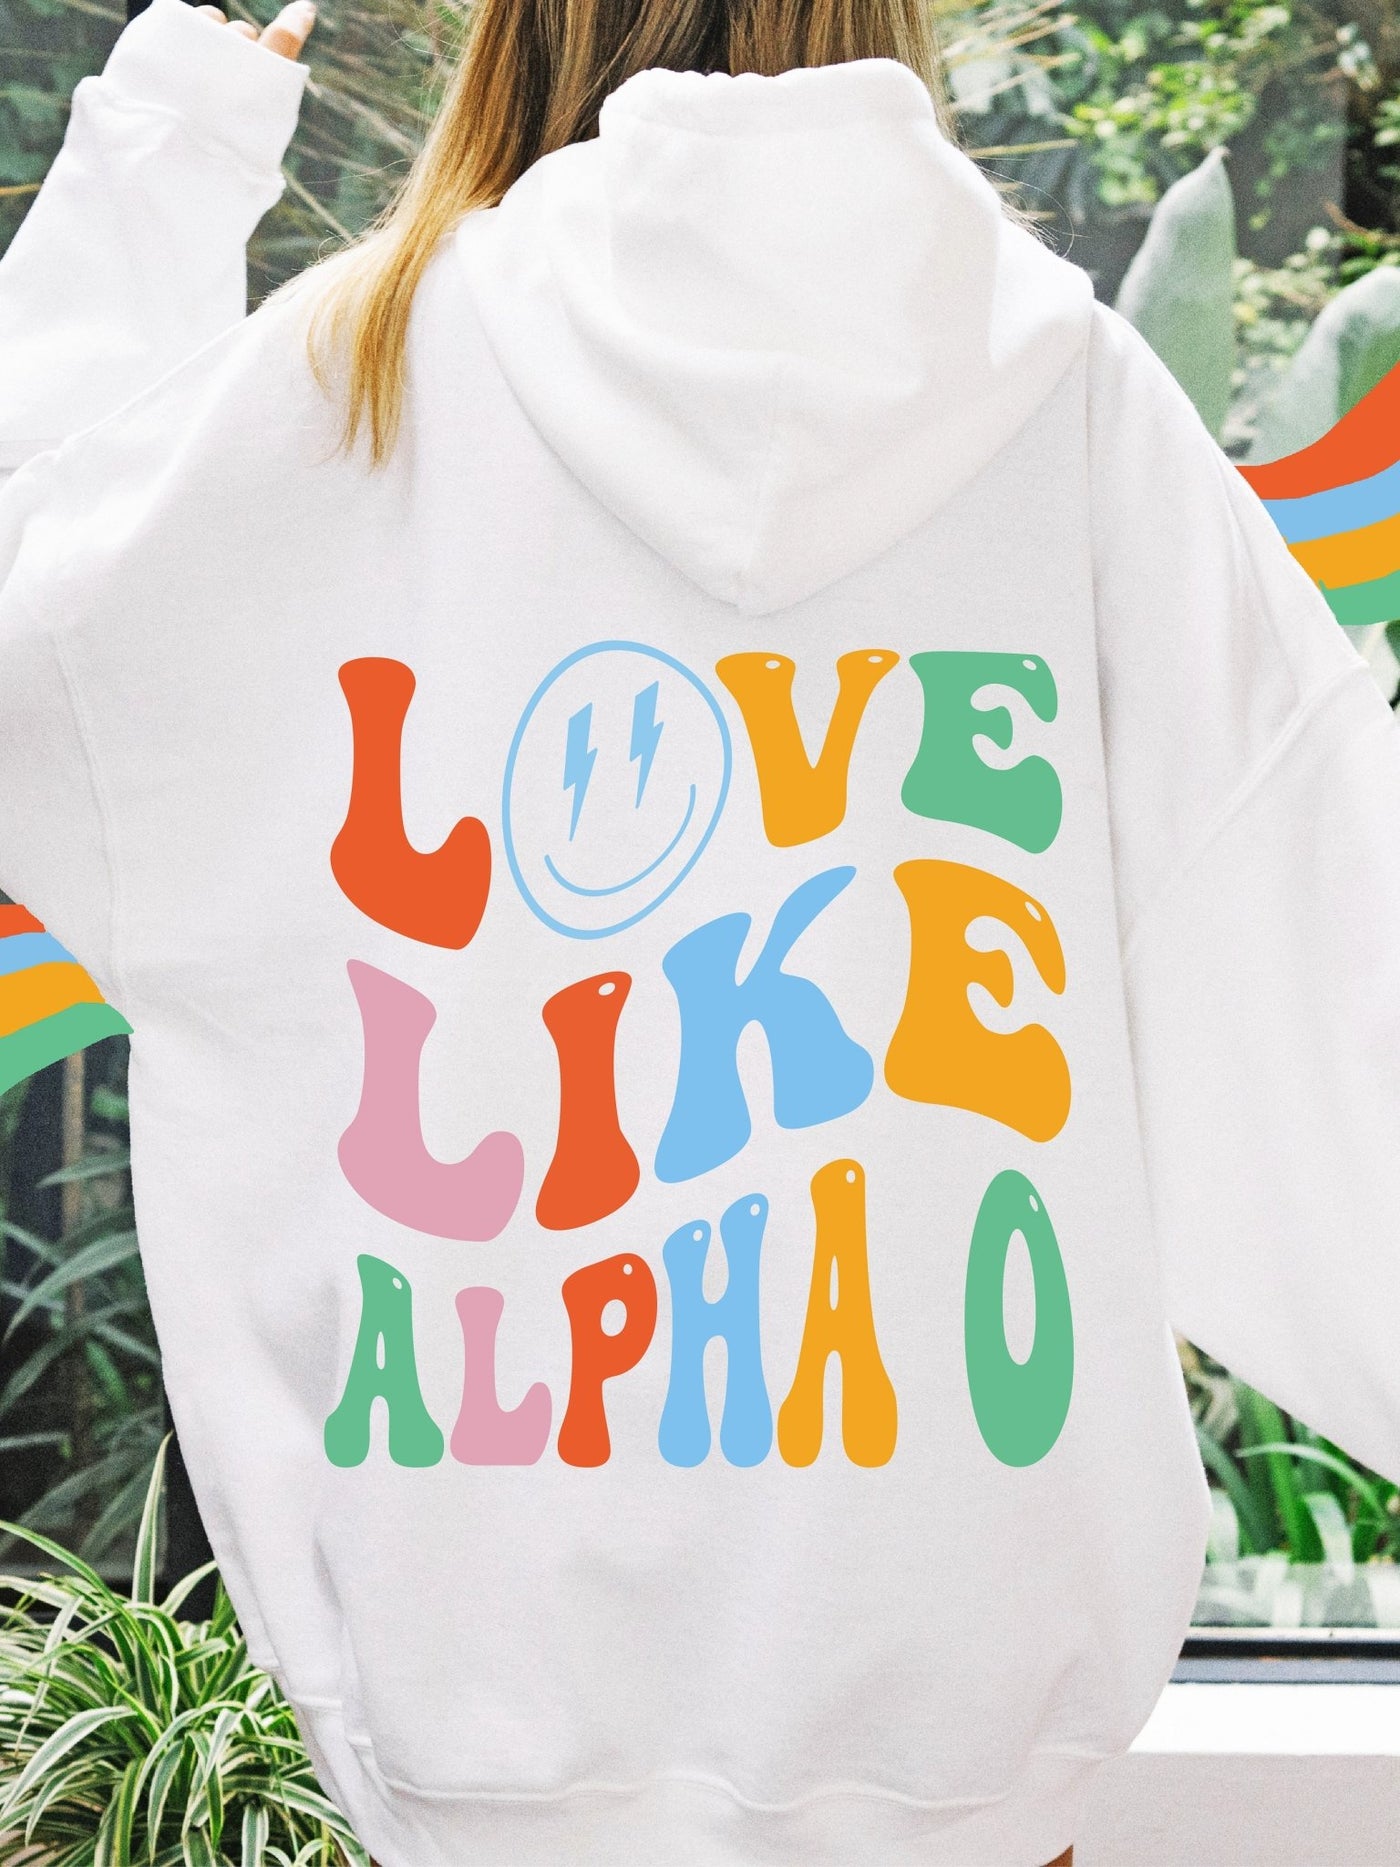 Alpha Omicron Pi Soft Sorority Sweatshirt | Love Like Alpha O Sorority Hoodie